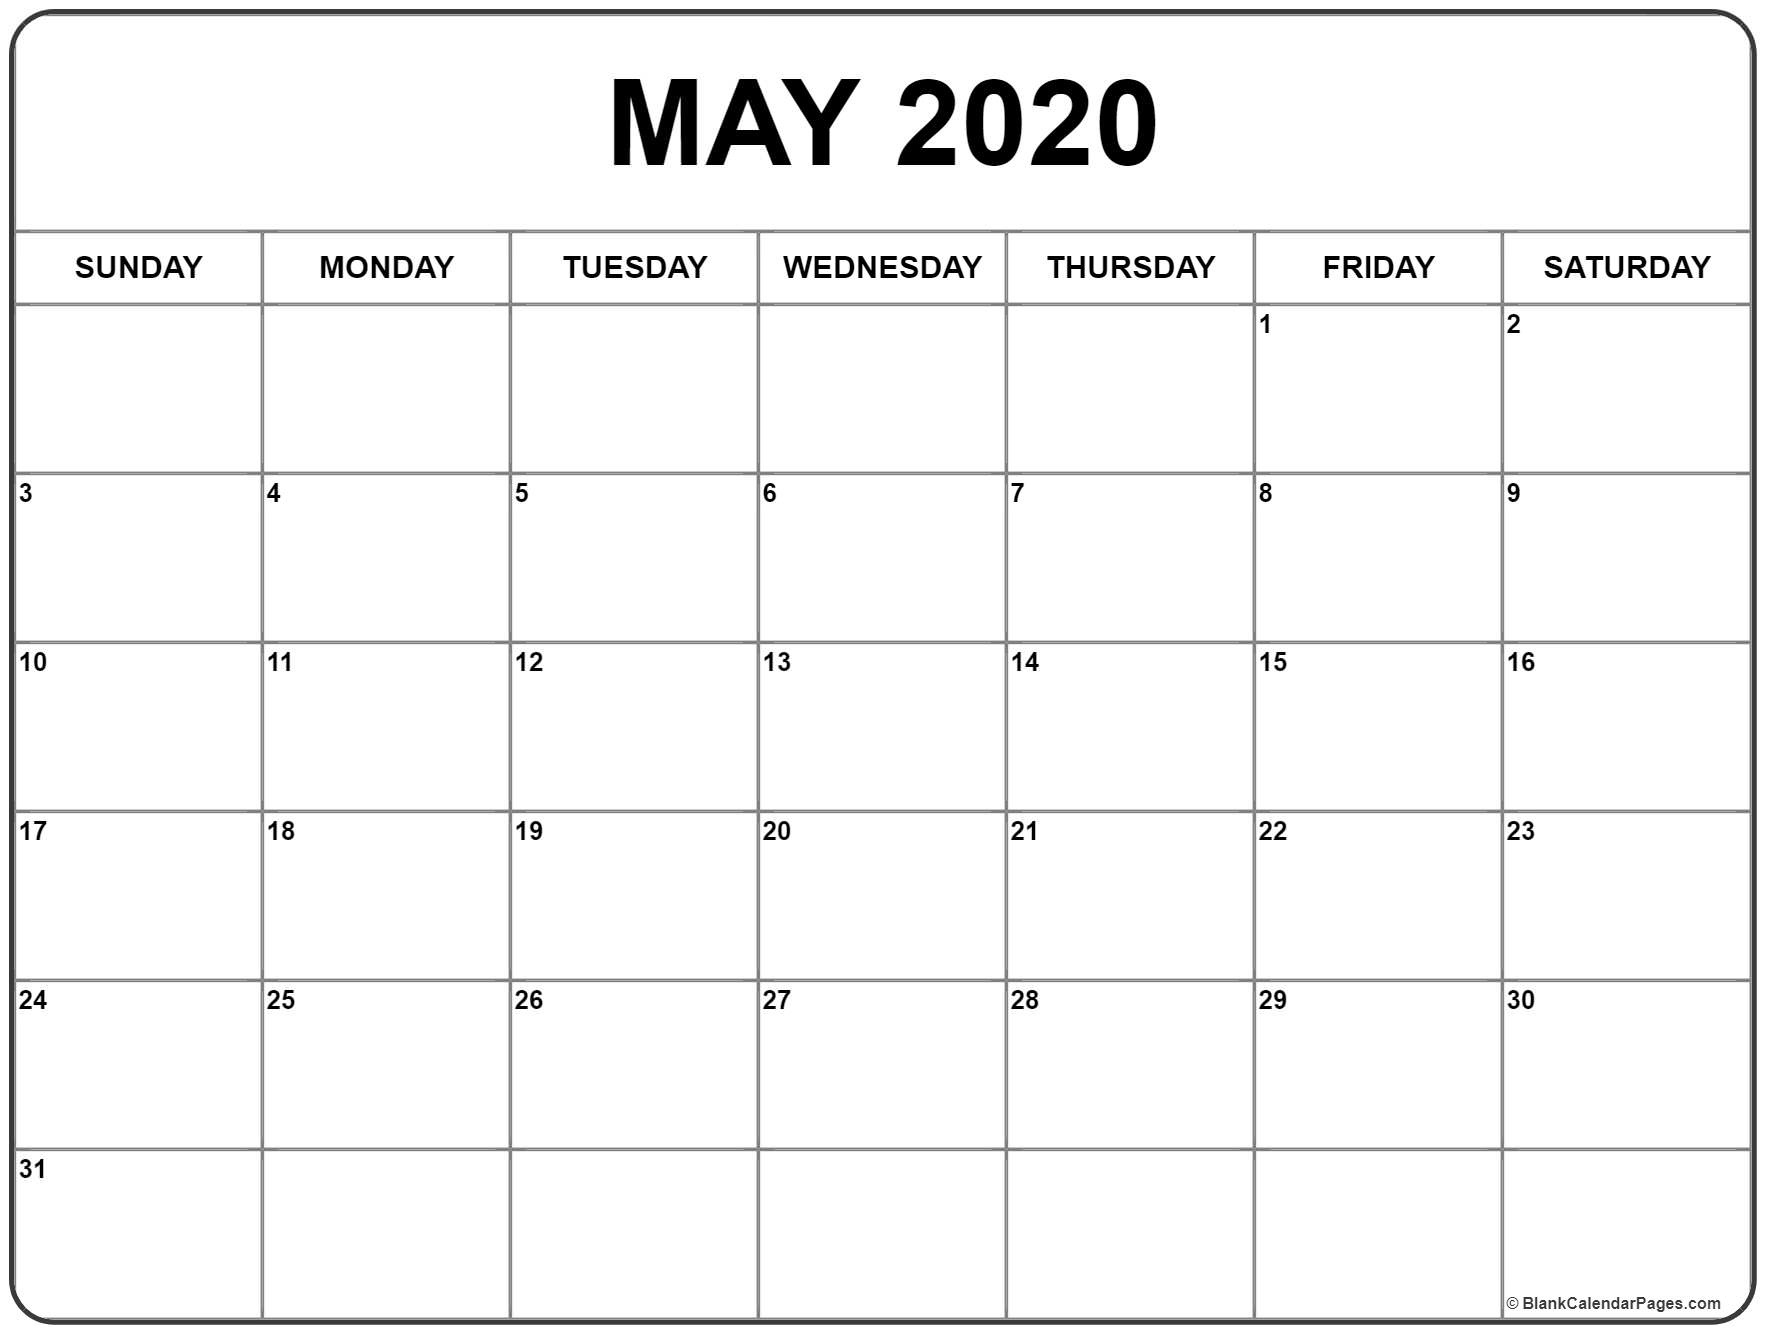 May Calendar Archives » Creative Calendar Ideas regarding Kalnirnay 2020 Holidays